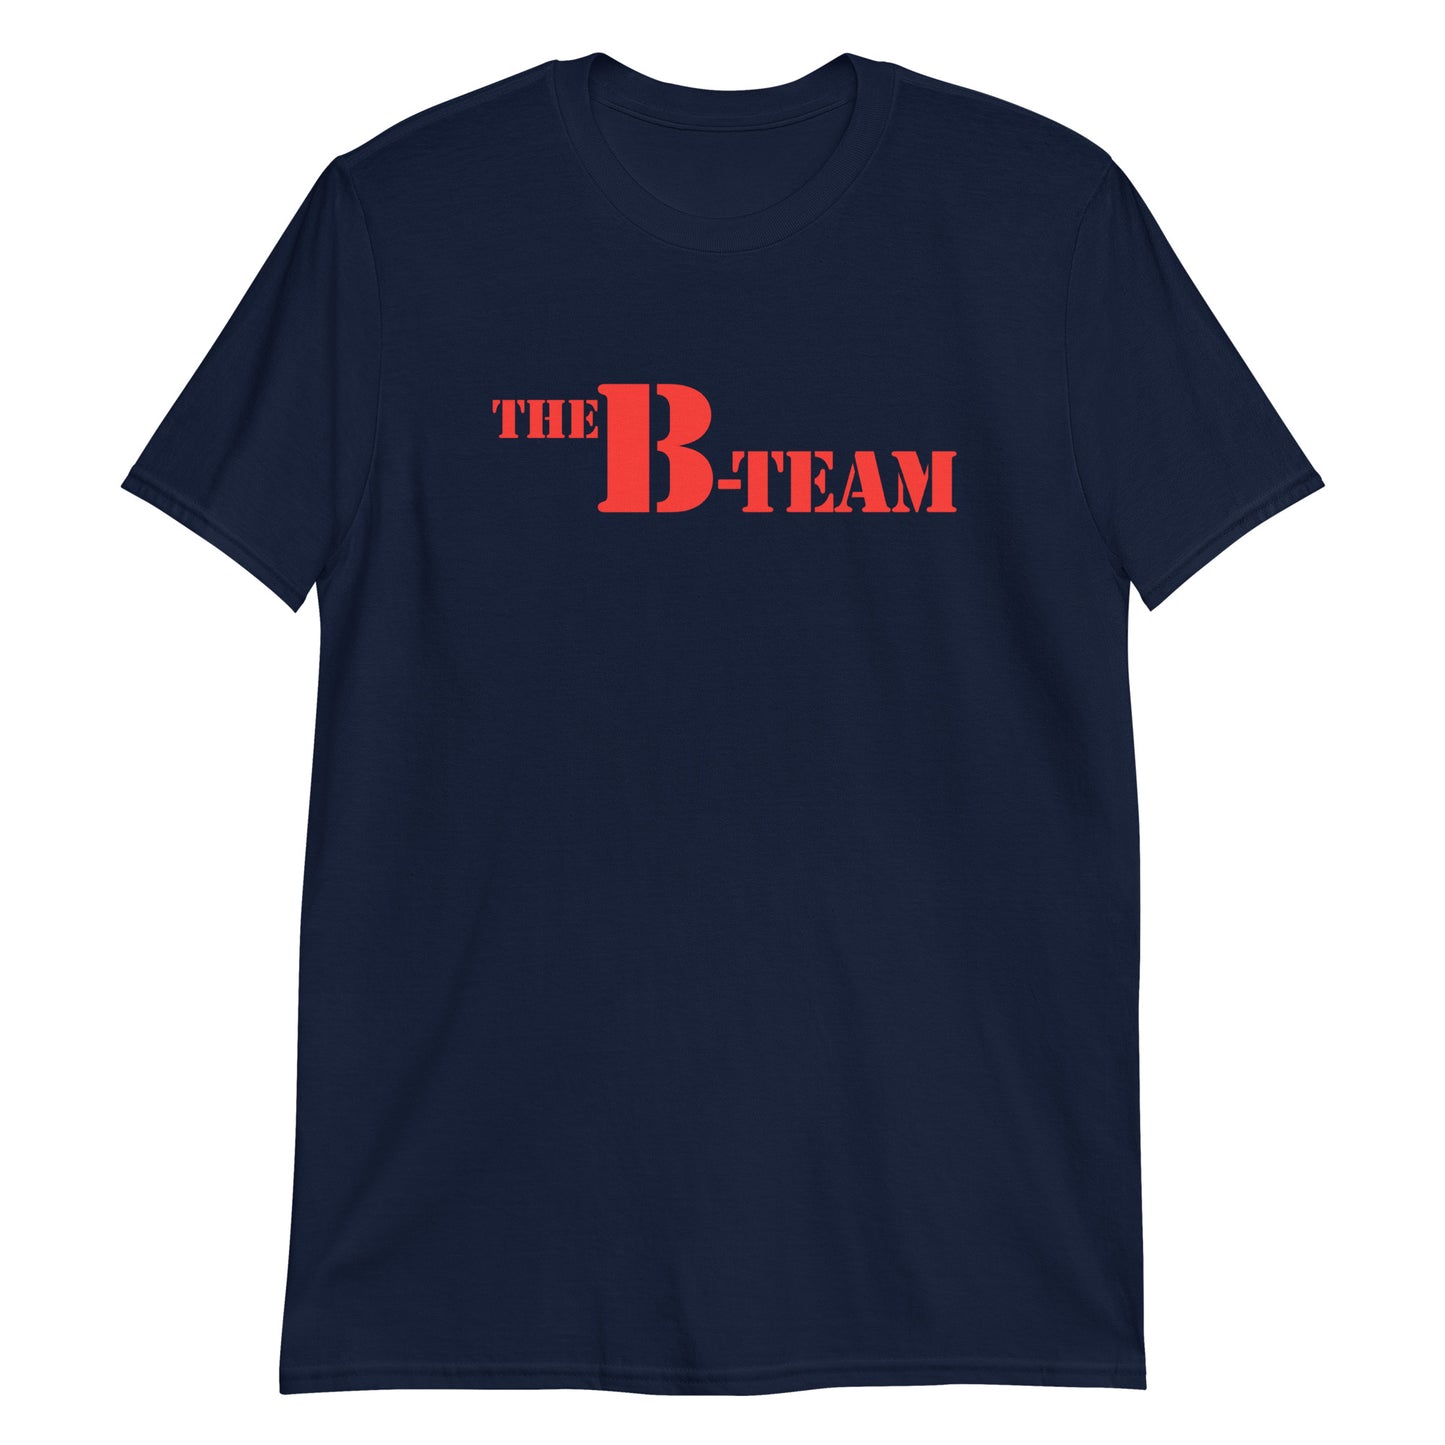 The B-Team t-shirt